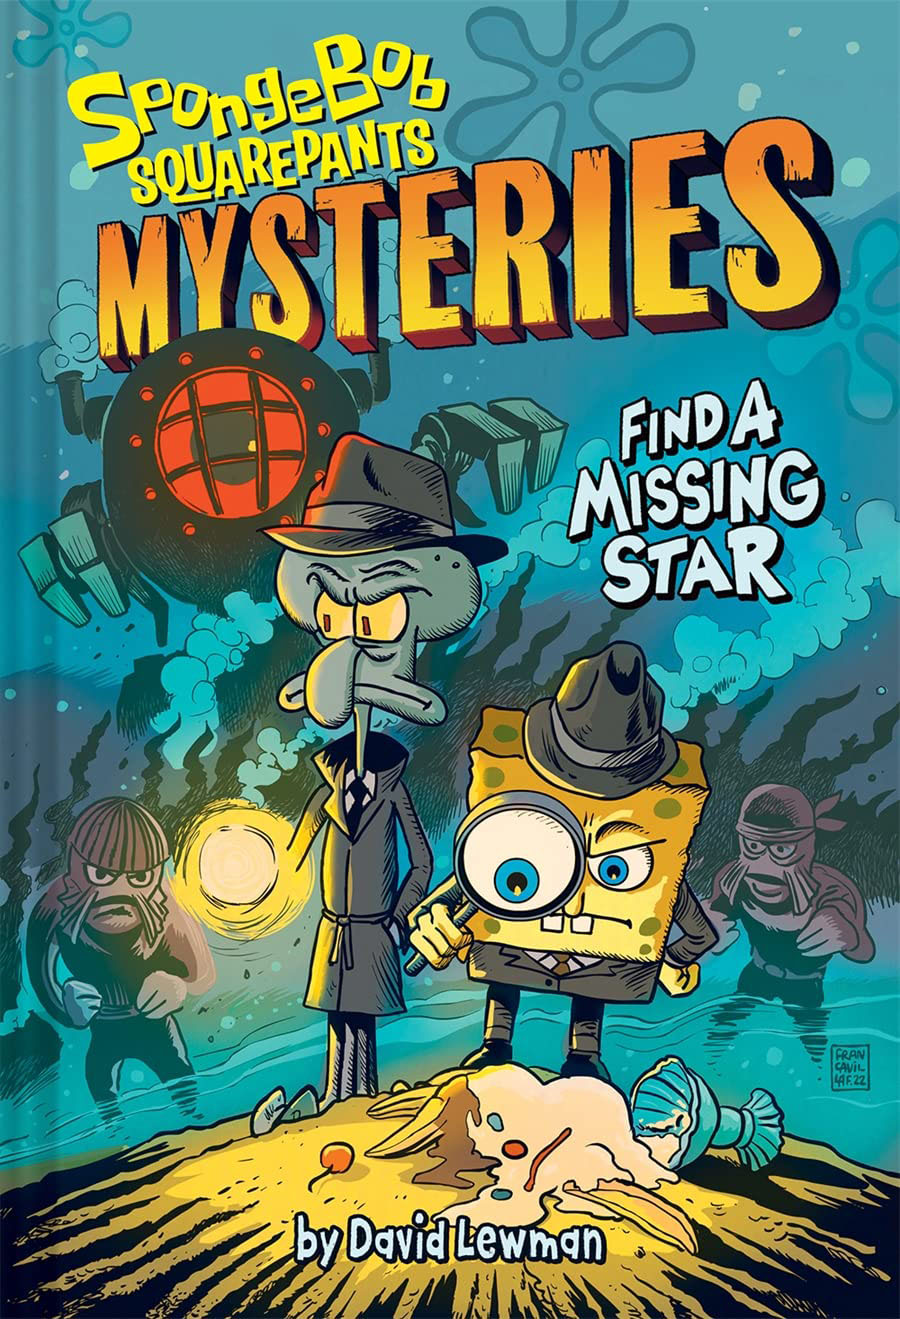 SpongeBob SquarePants Mysteries Find A Missing Star HC